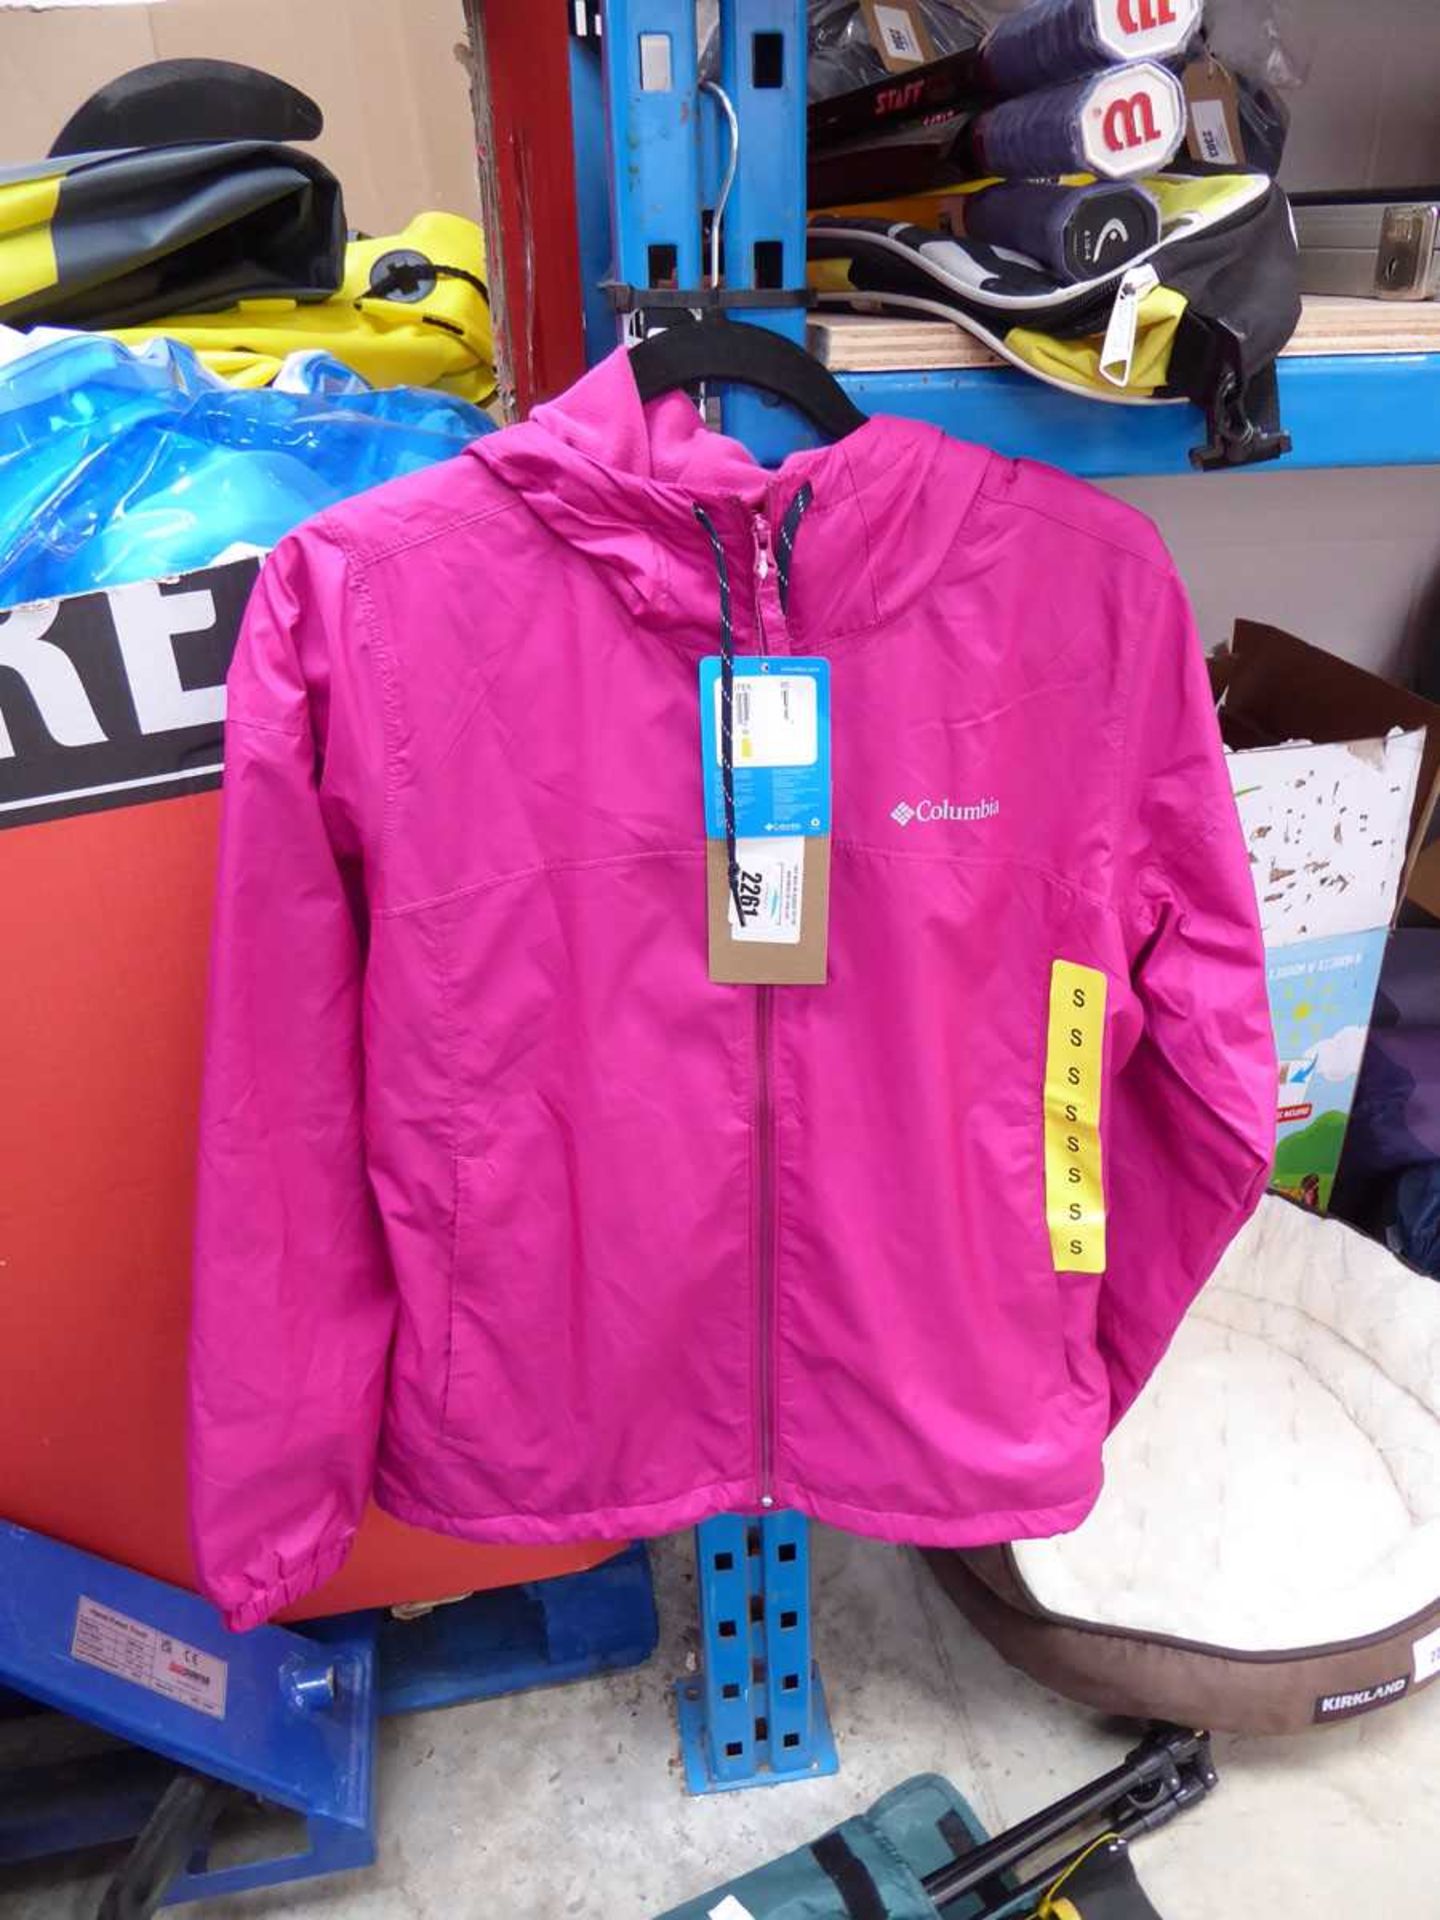 +VAT Collumbia rain jacket in pink (size S)